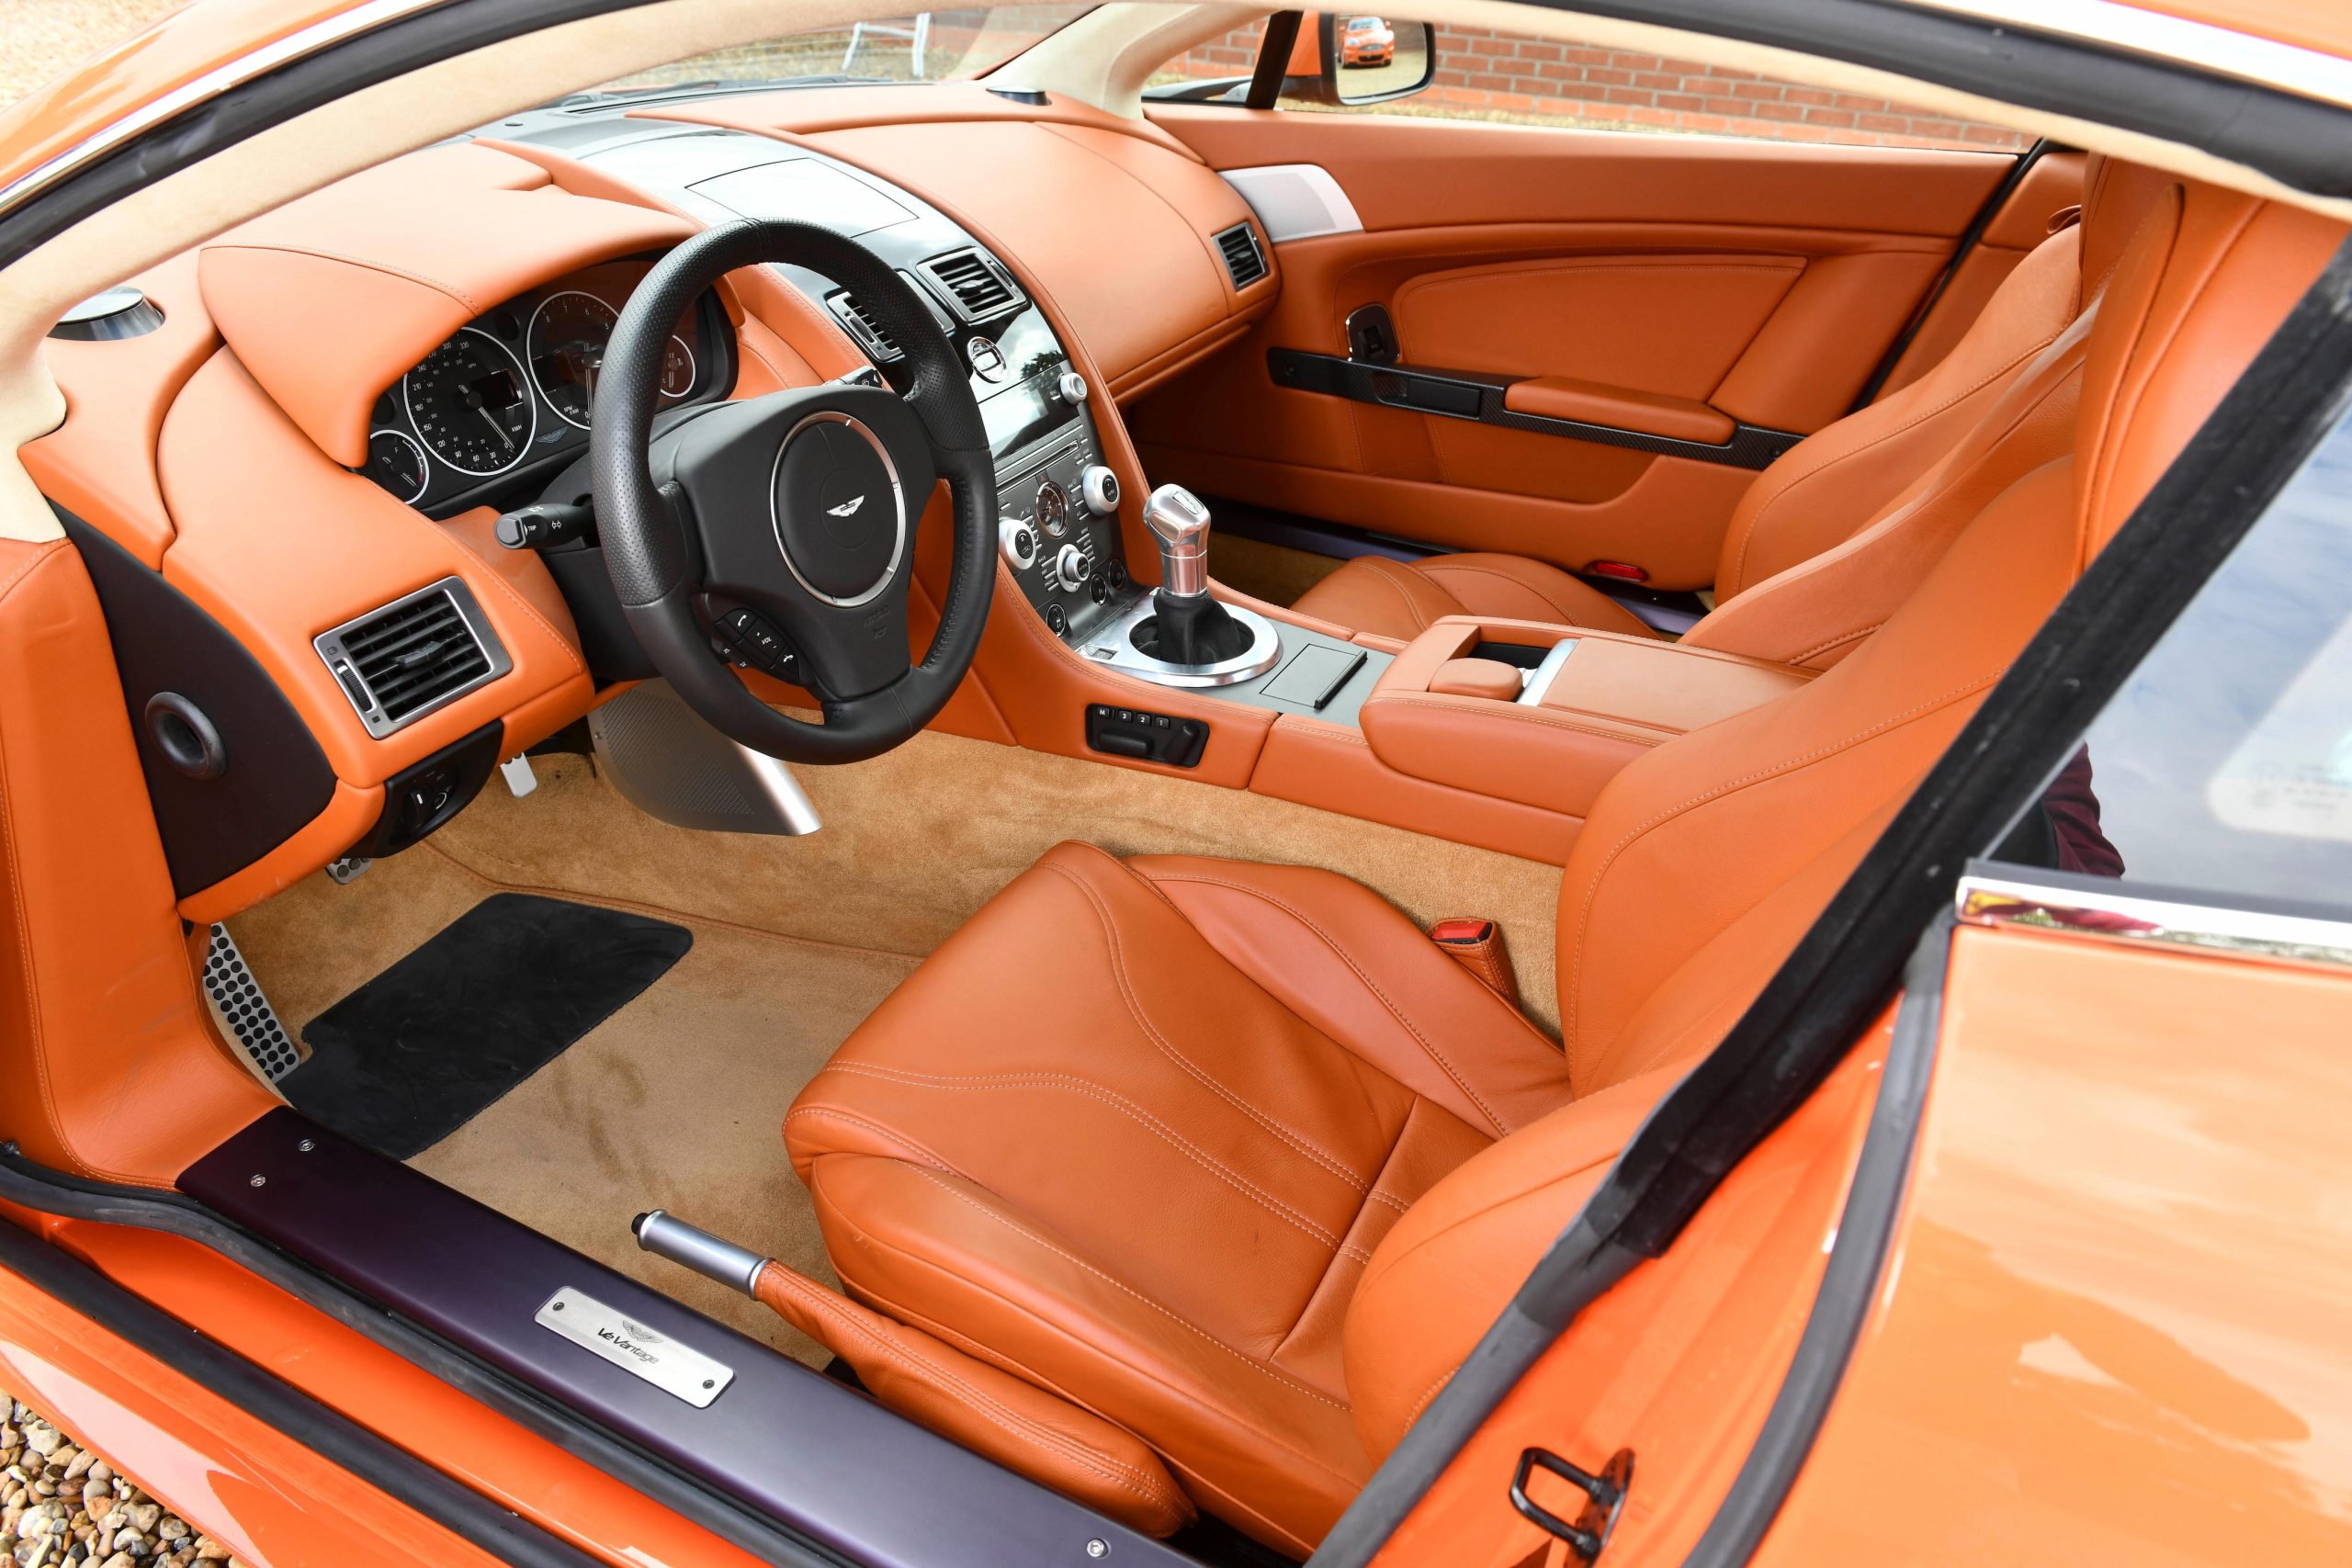 Interior of an orange Aston Martin V12 Vantage